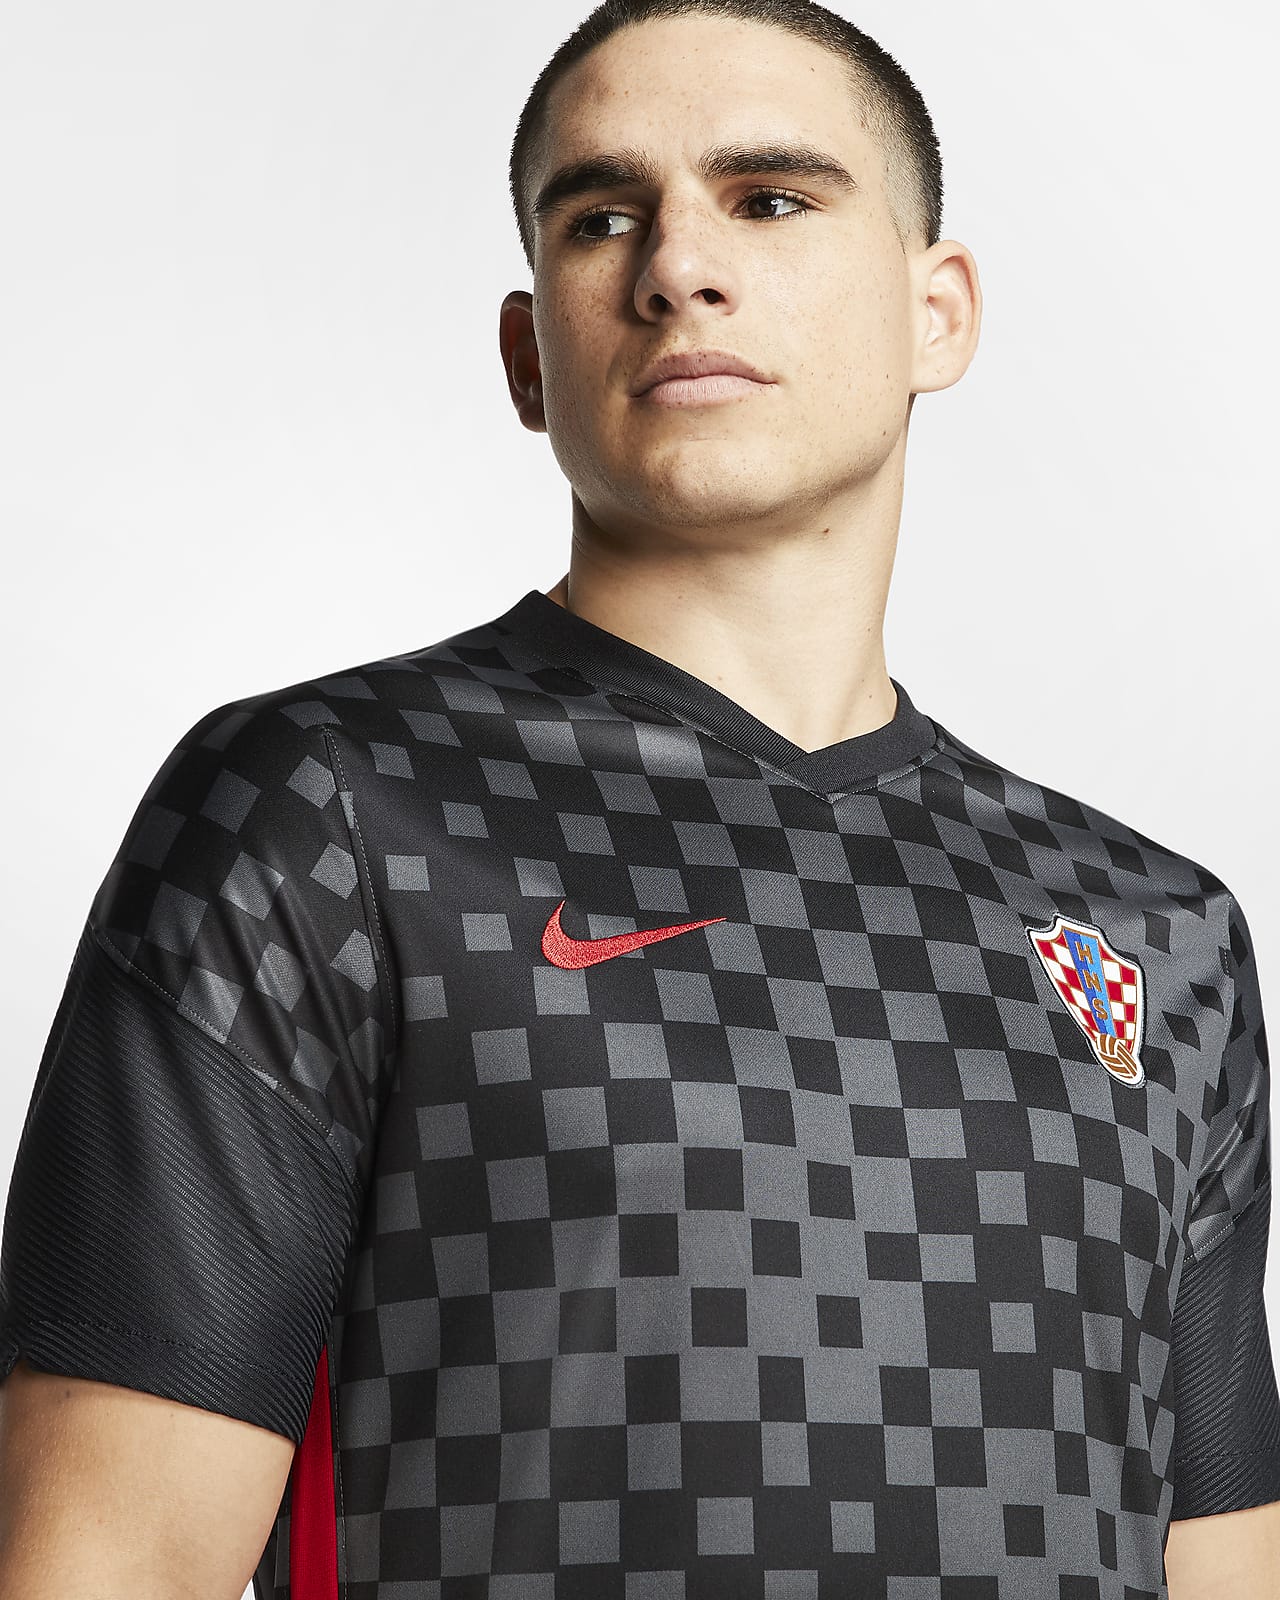 Croatia 2020 Nike Away Kit | 20/21 Kits | Football shirt blog